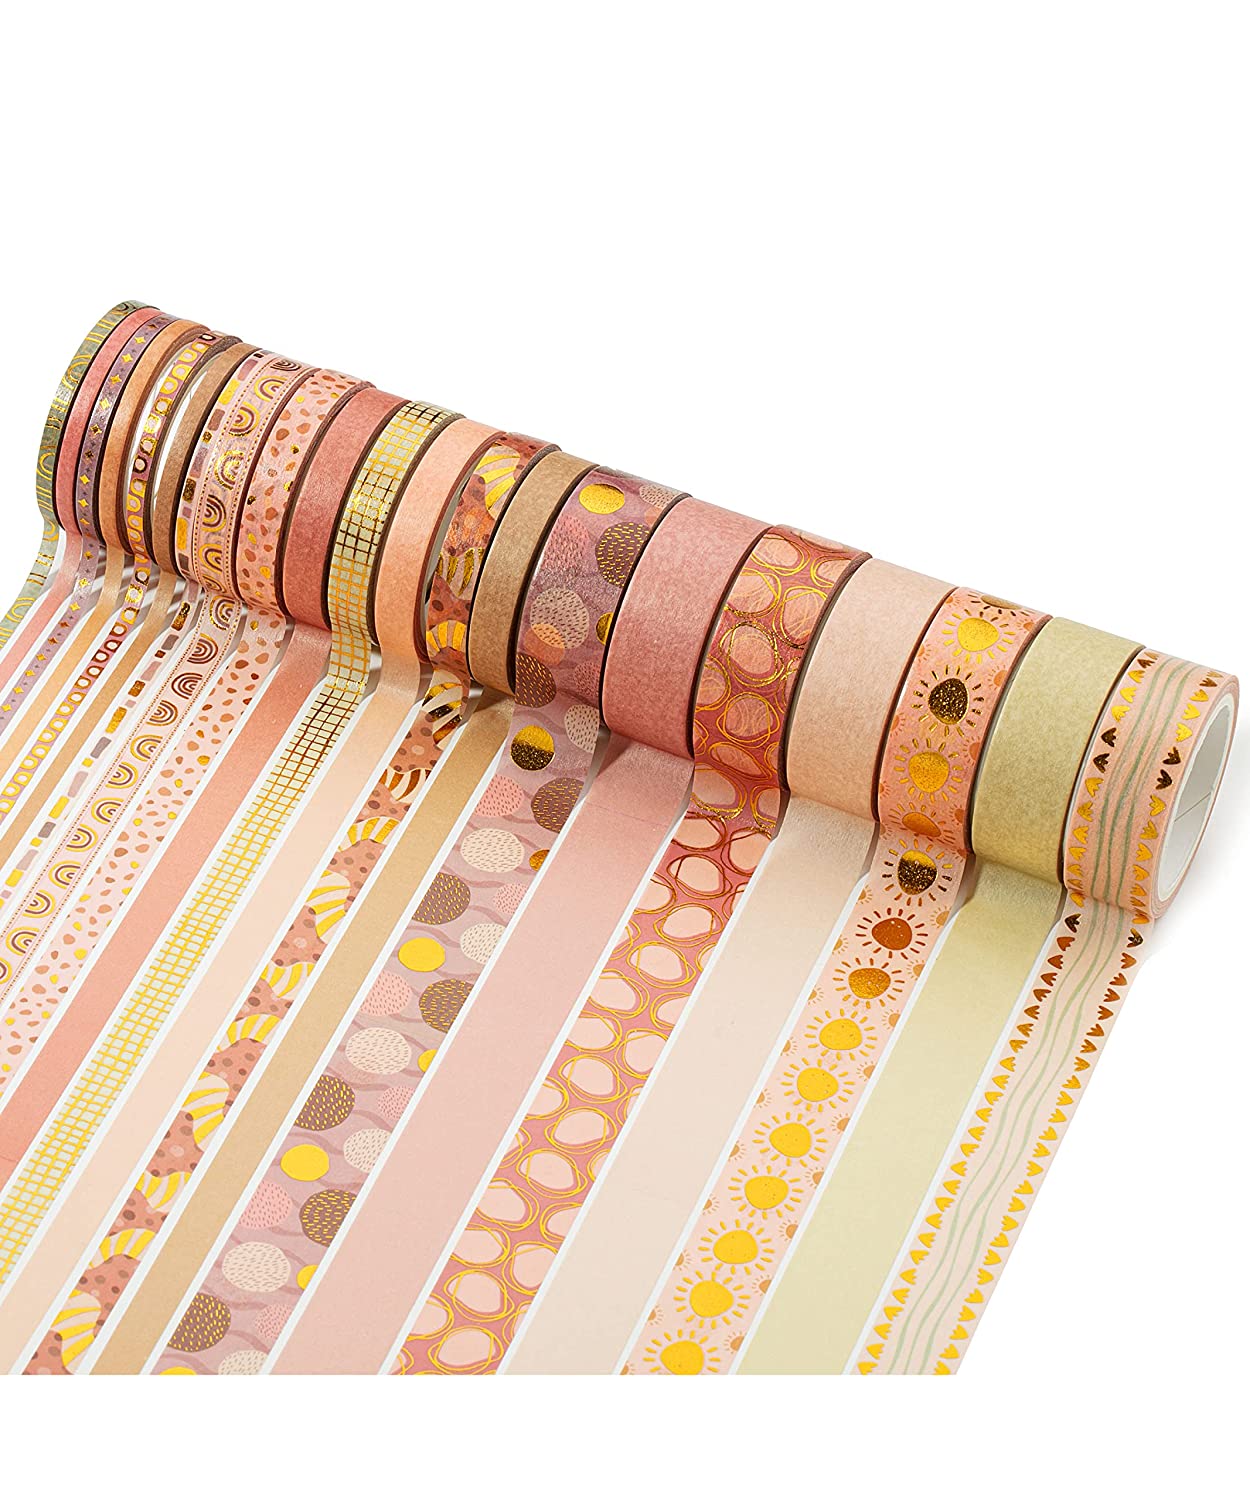 Mr. Pen- Washi Tape Set, 21 Roll, Boho Design, Decorative Tape, Washi  Tapes, Cute Washi Tape, Cute Tape